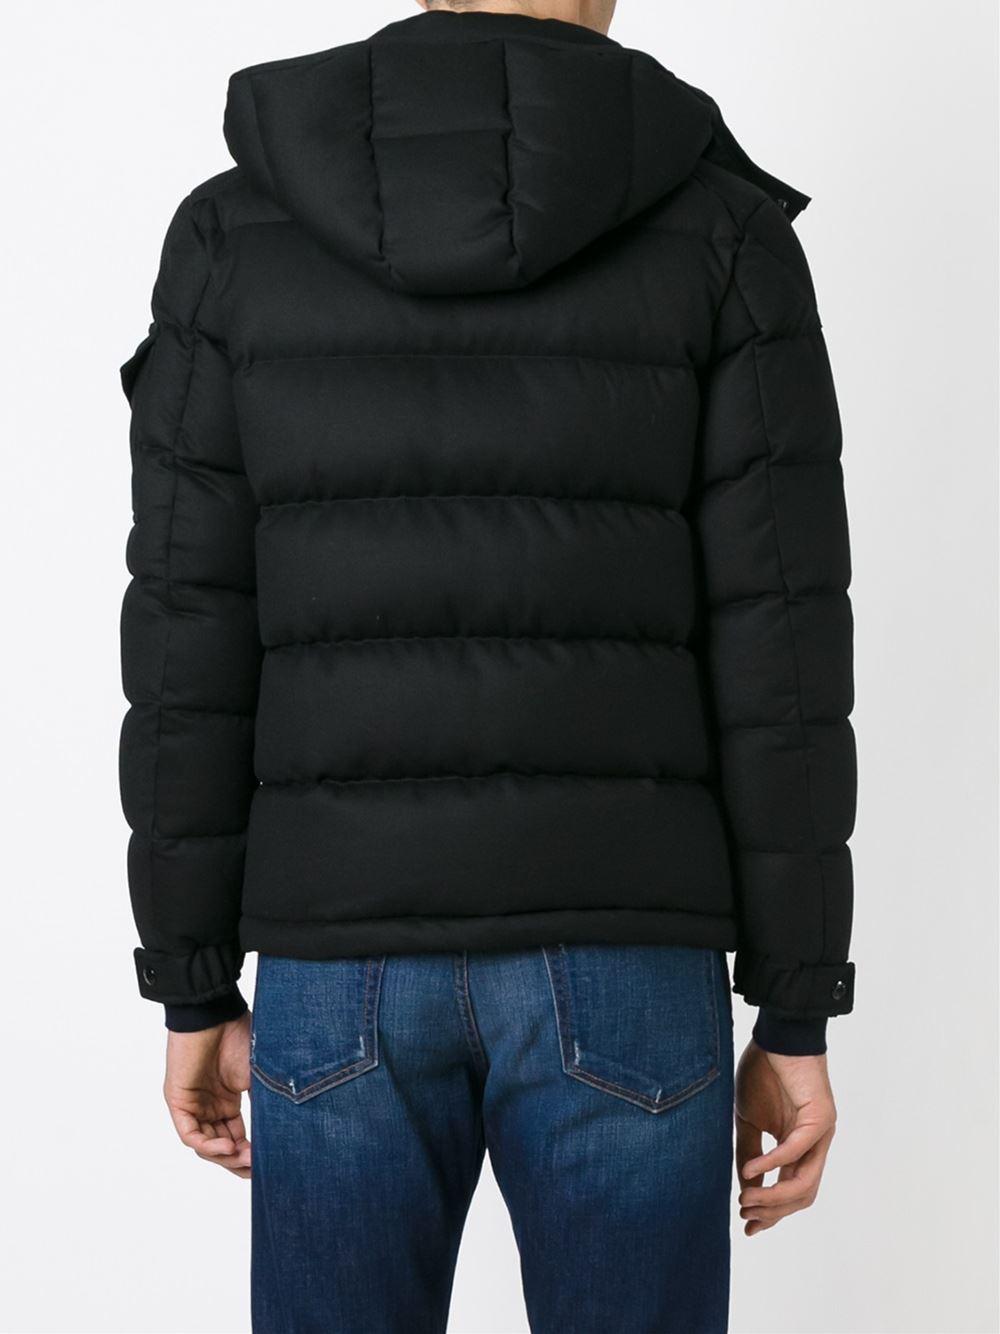 Moncler Wool 'montgenevre' Padded Jacket in Black for Men - Lyst